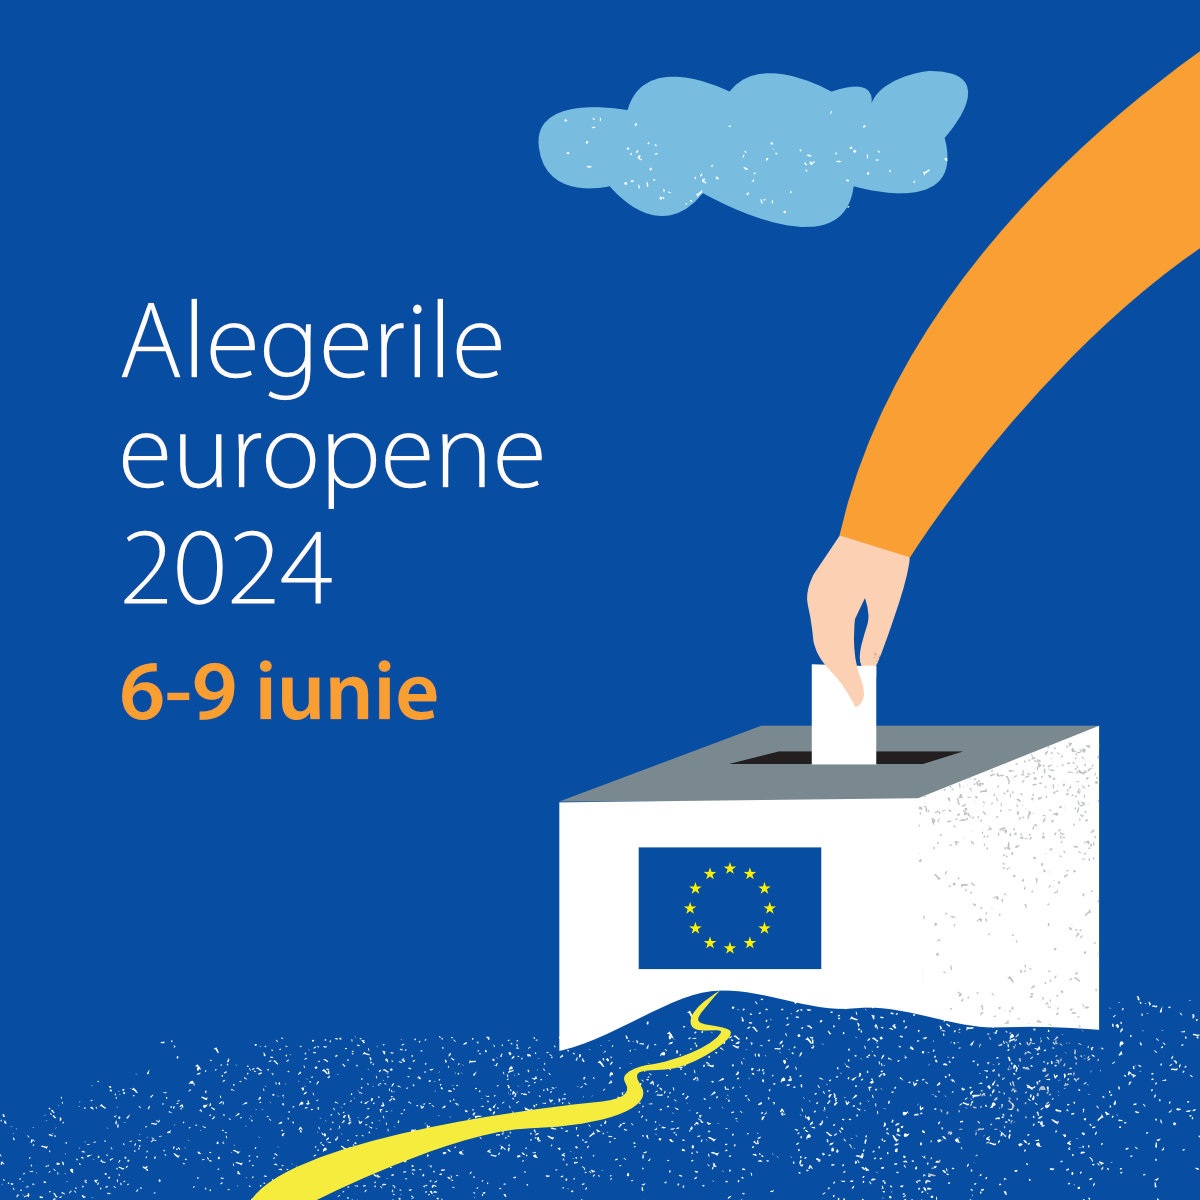 Alegerile europene 2024 - Square.jpg